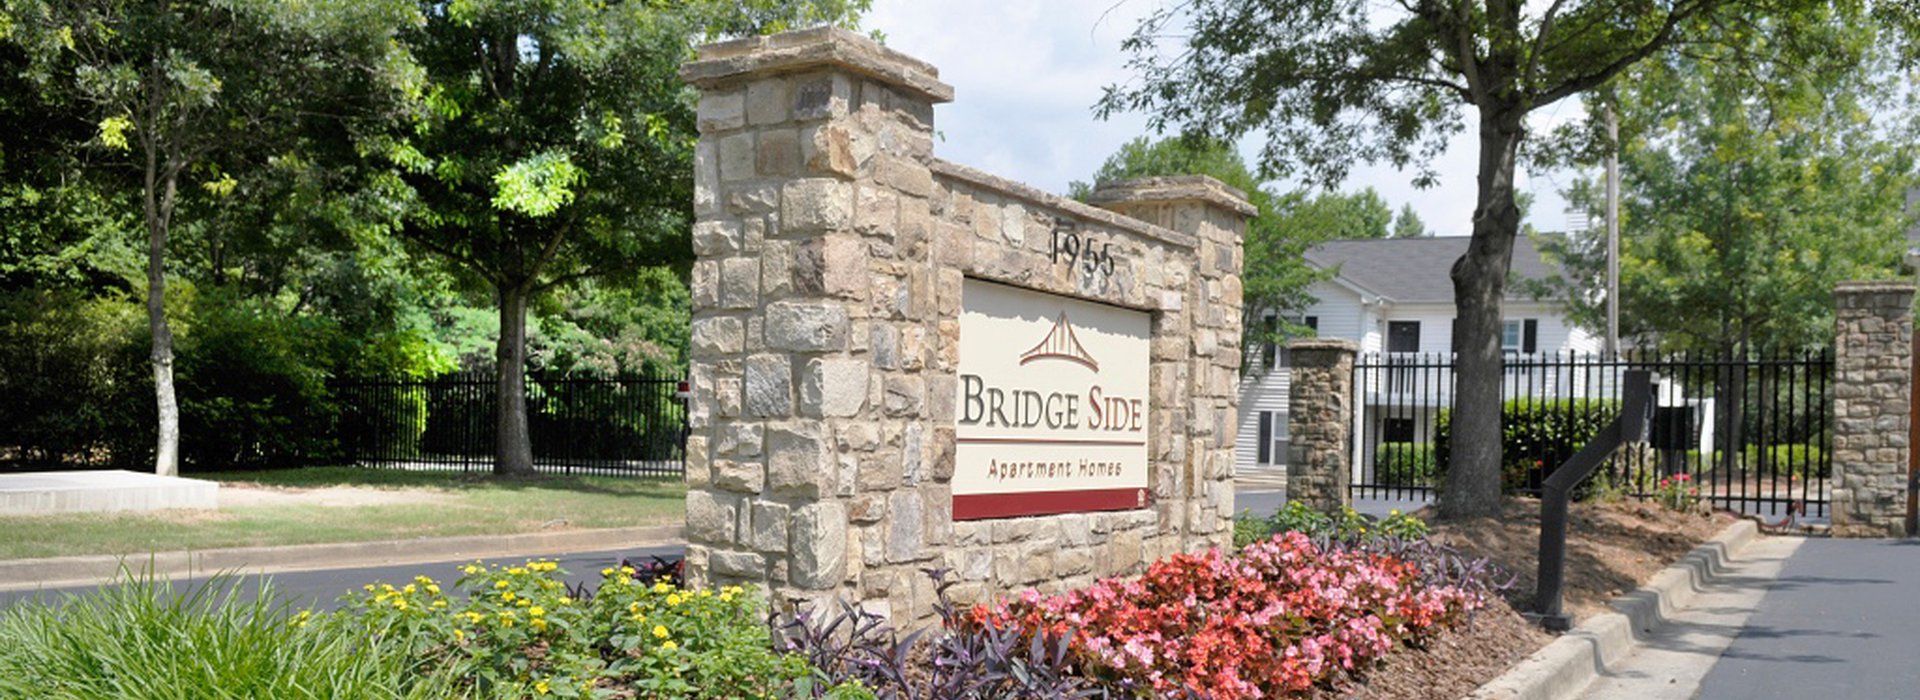 Bridge Side Apartments sign